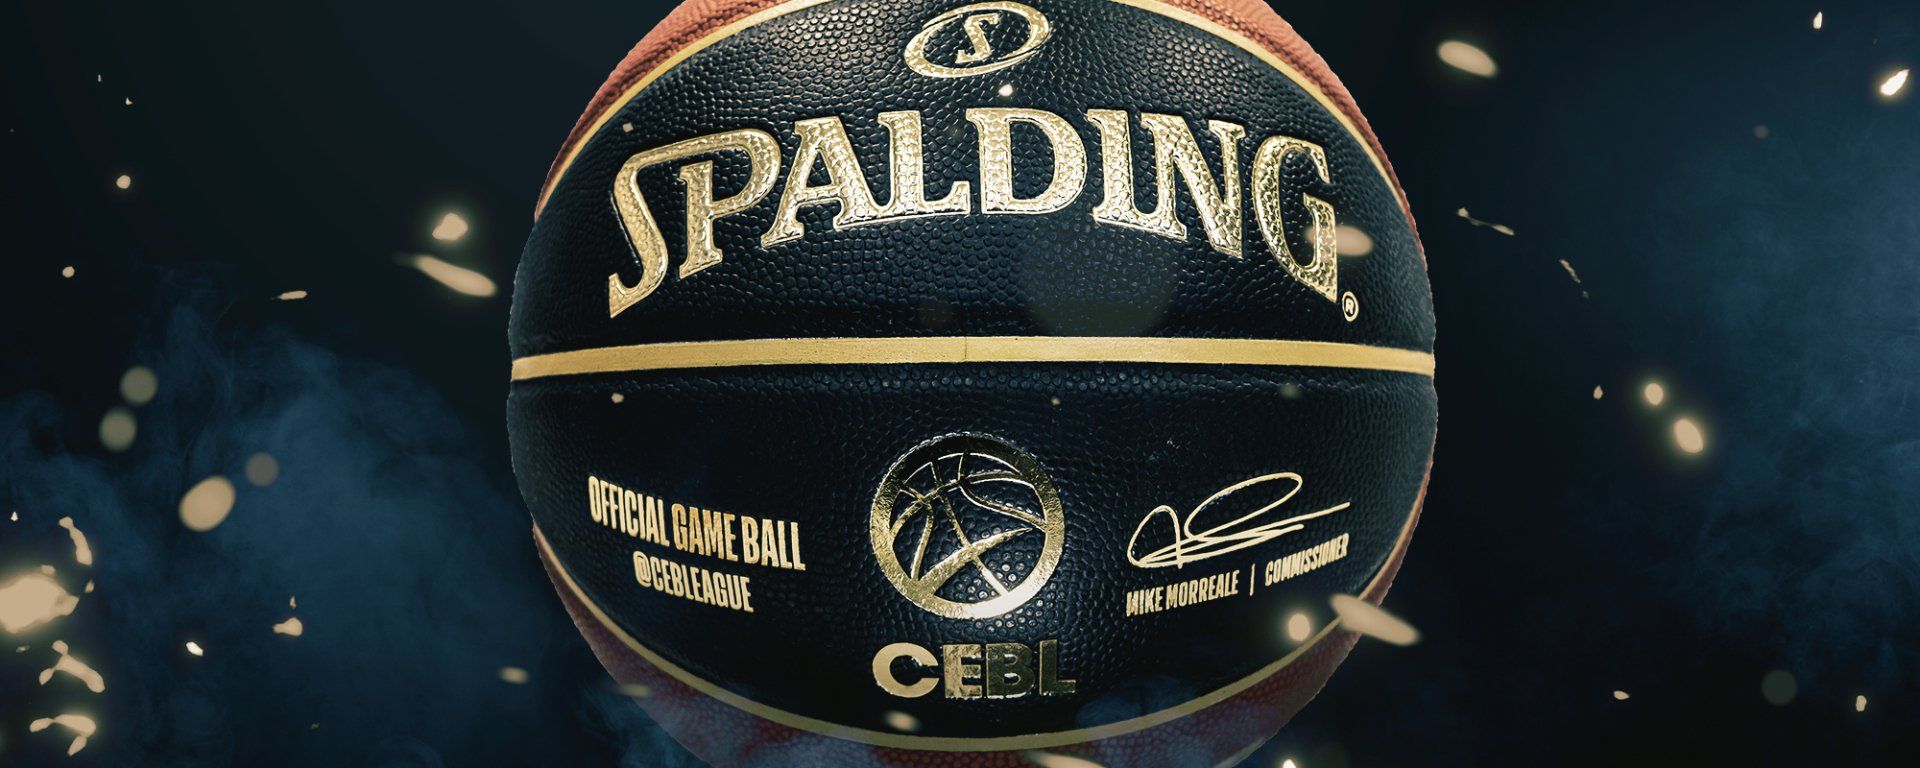 Official Gold Spalding NBA Finals Championship Basketball